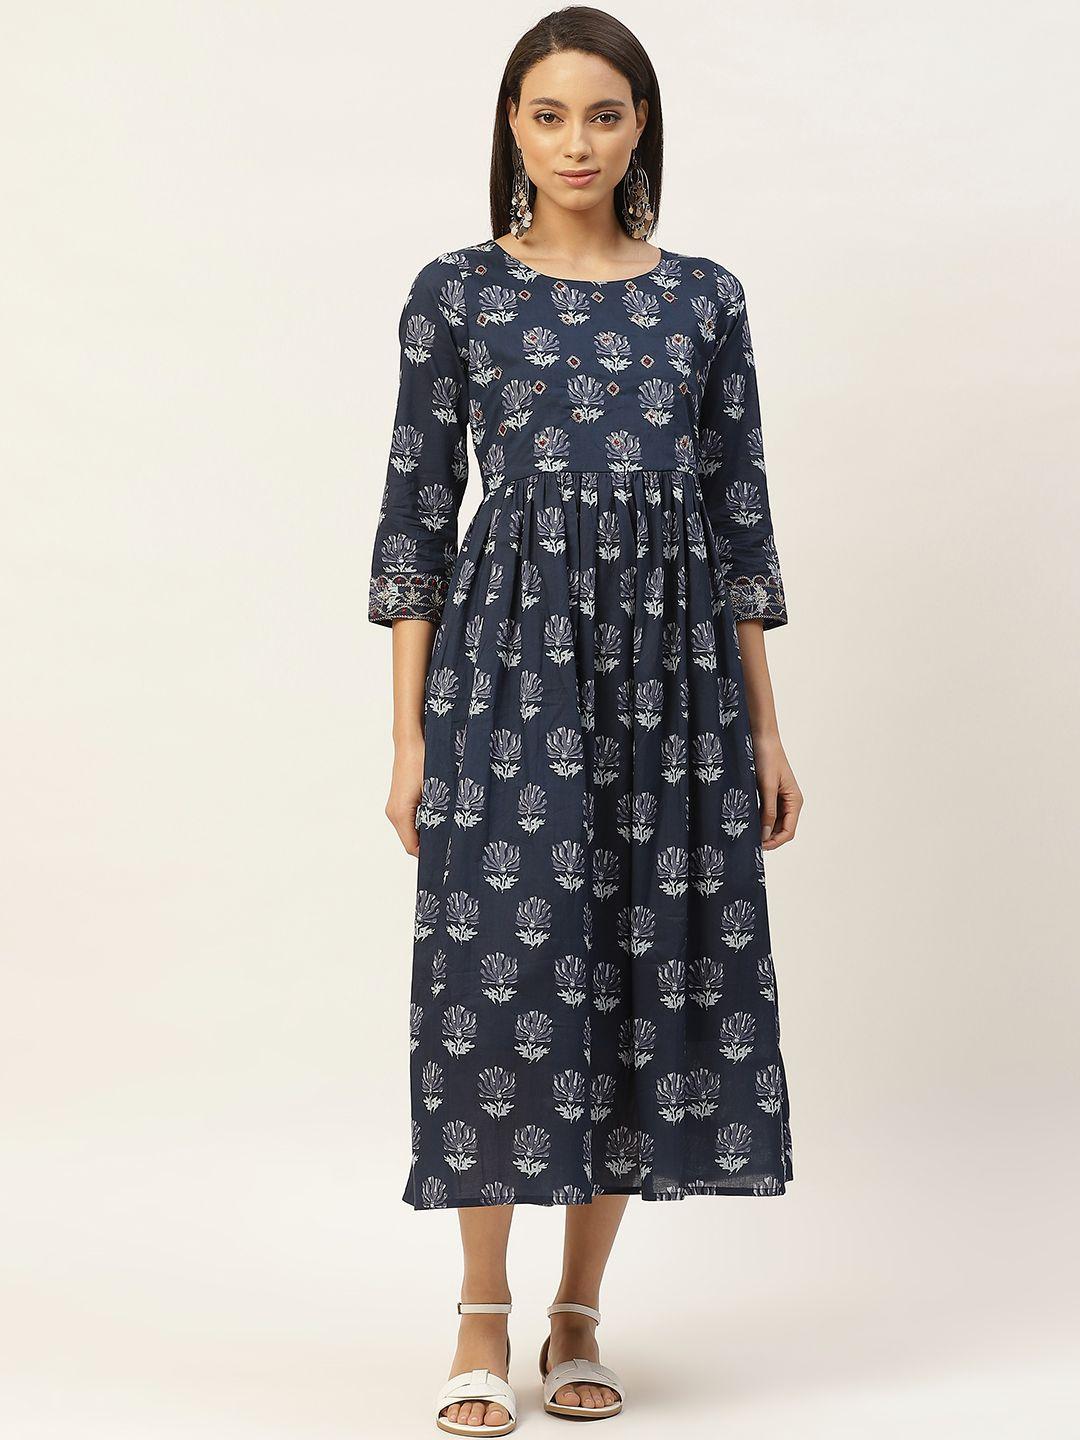 shae by sassafras women navy blue cotton printed a-line dress